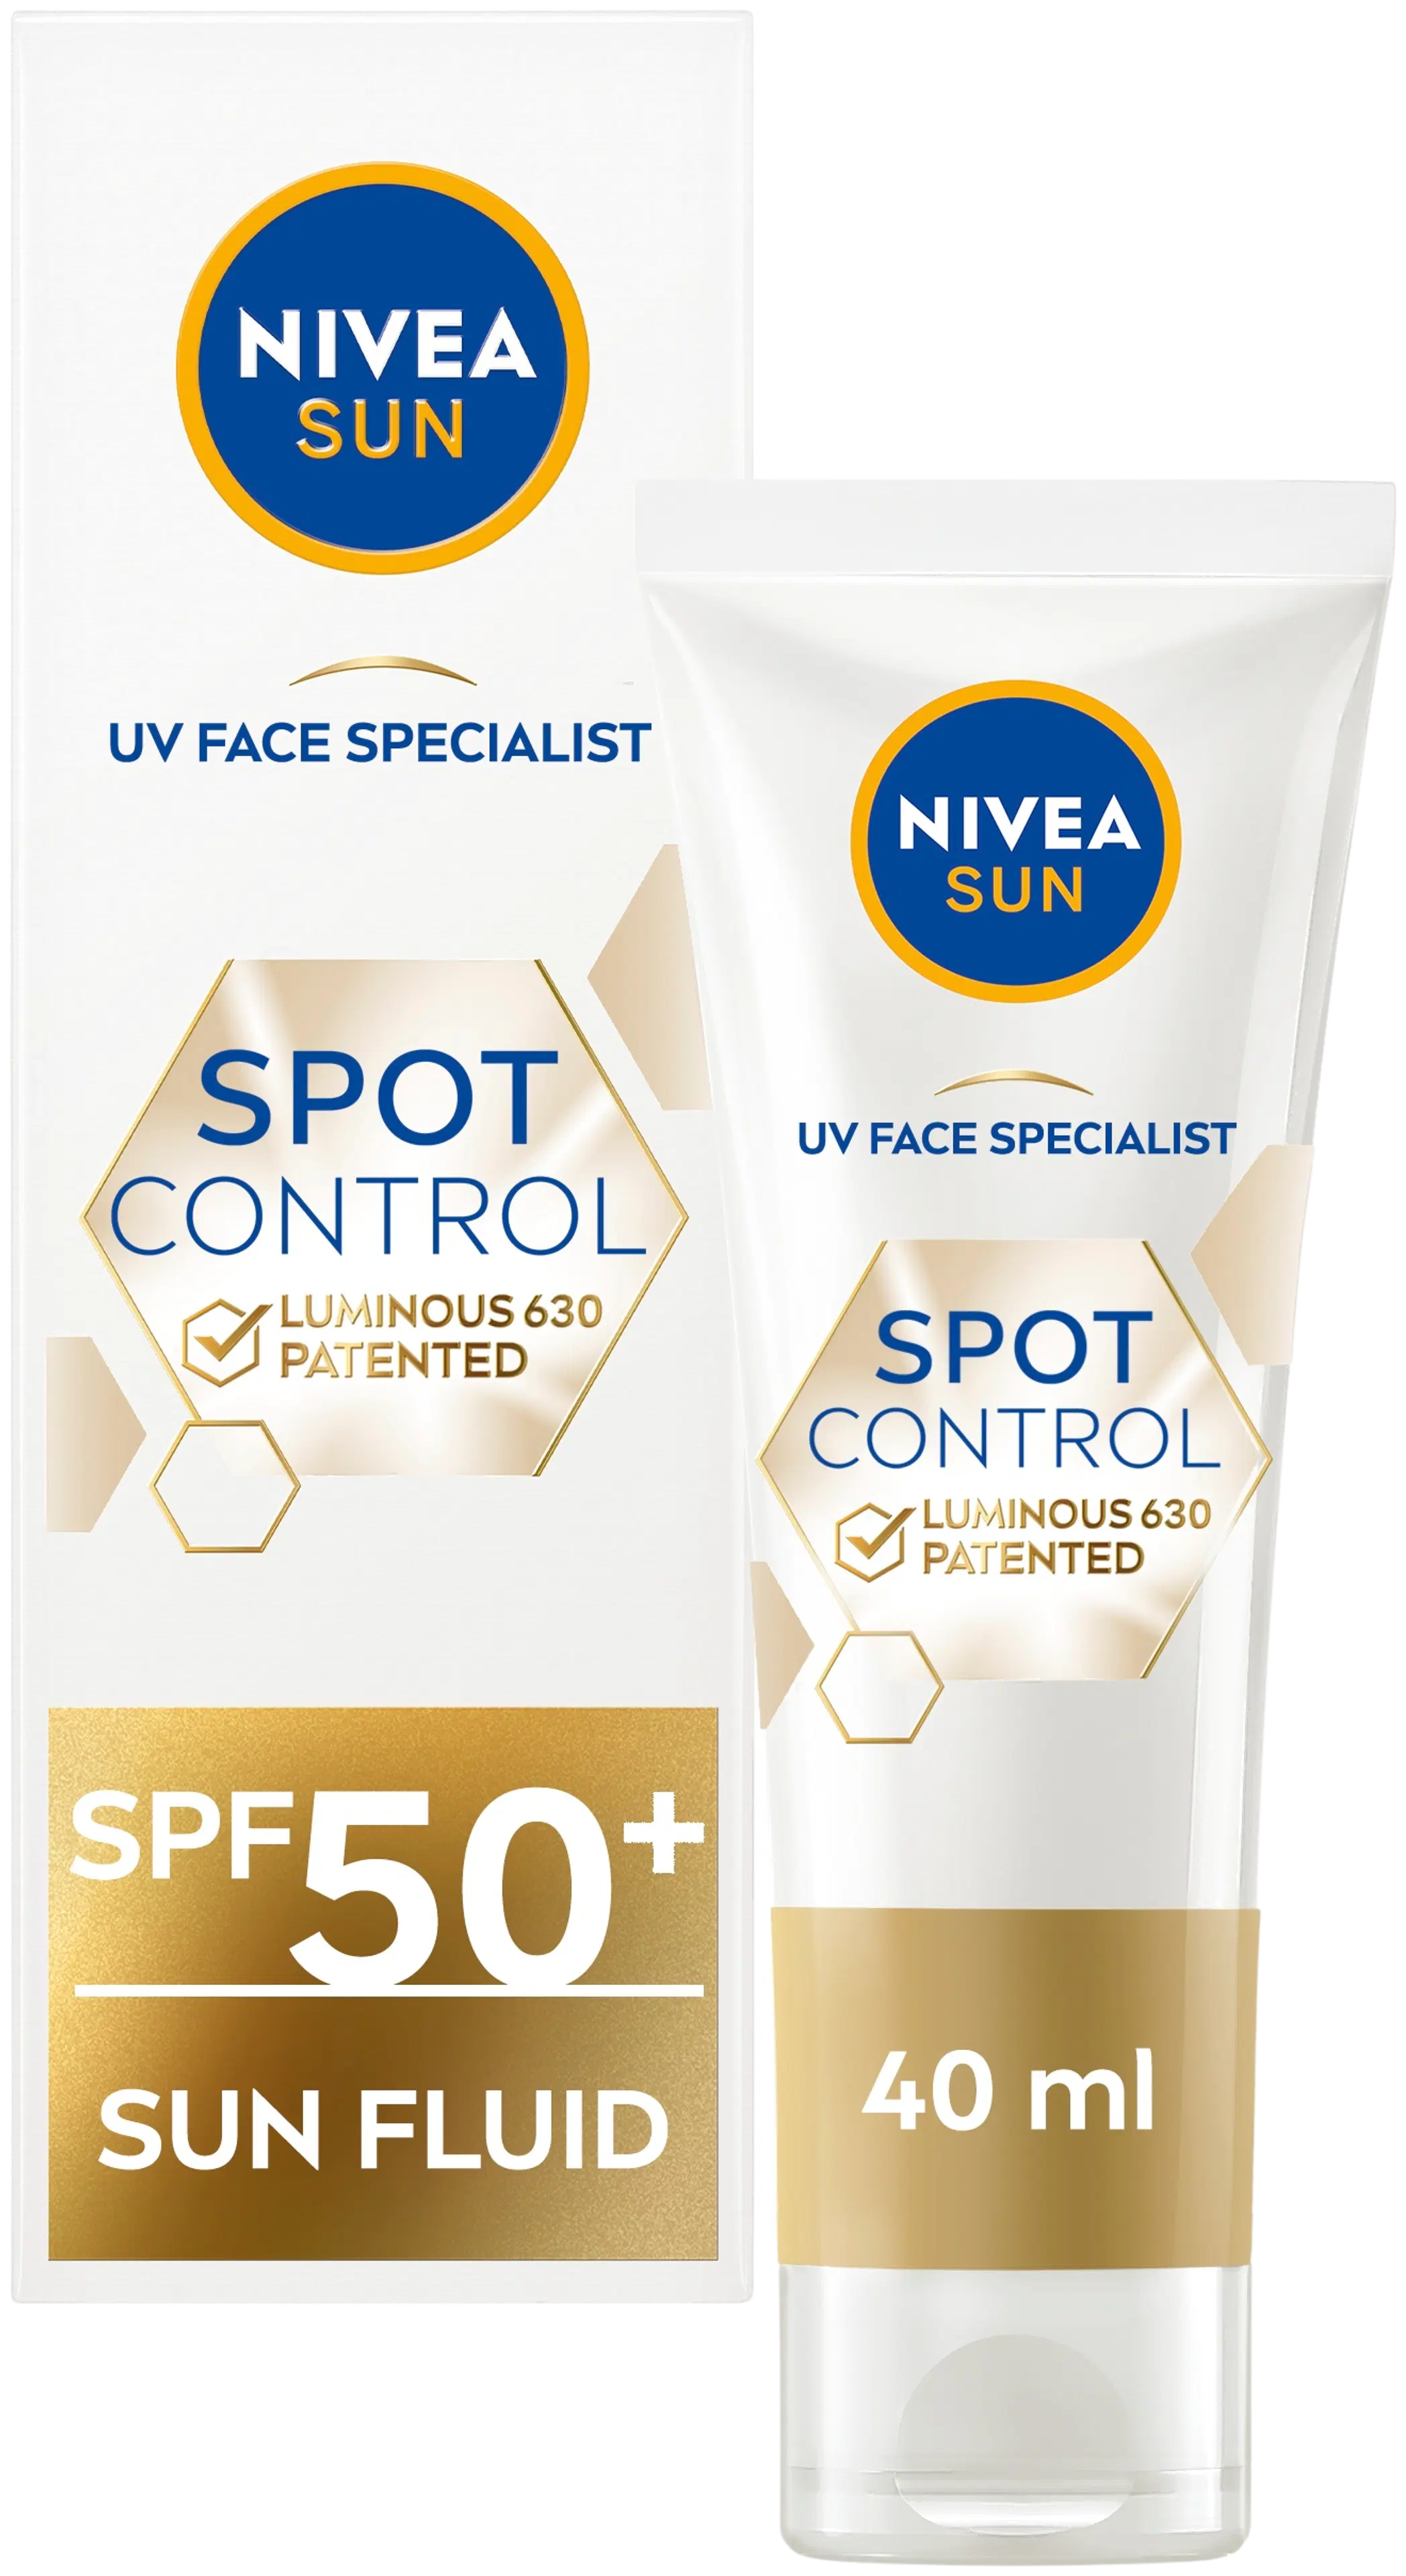 NIVEA SUN 40ml UV Face LUMINOUS630® Spot Control SK50+ -aurinkovoide